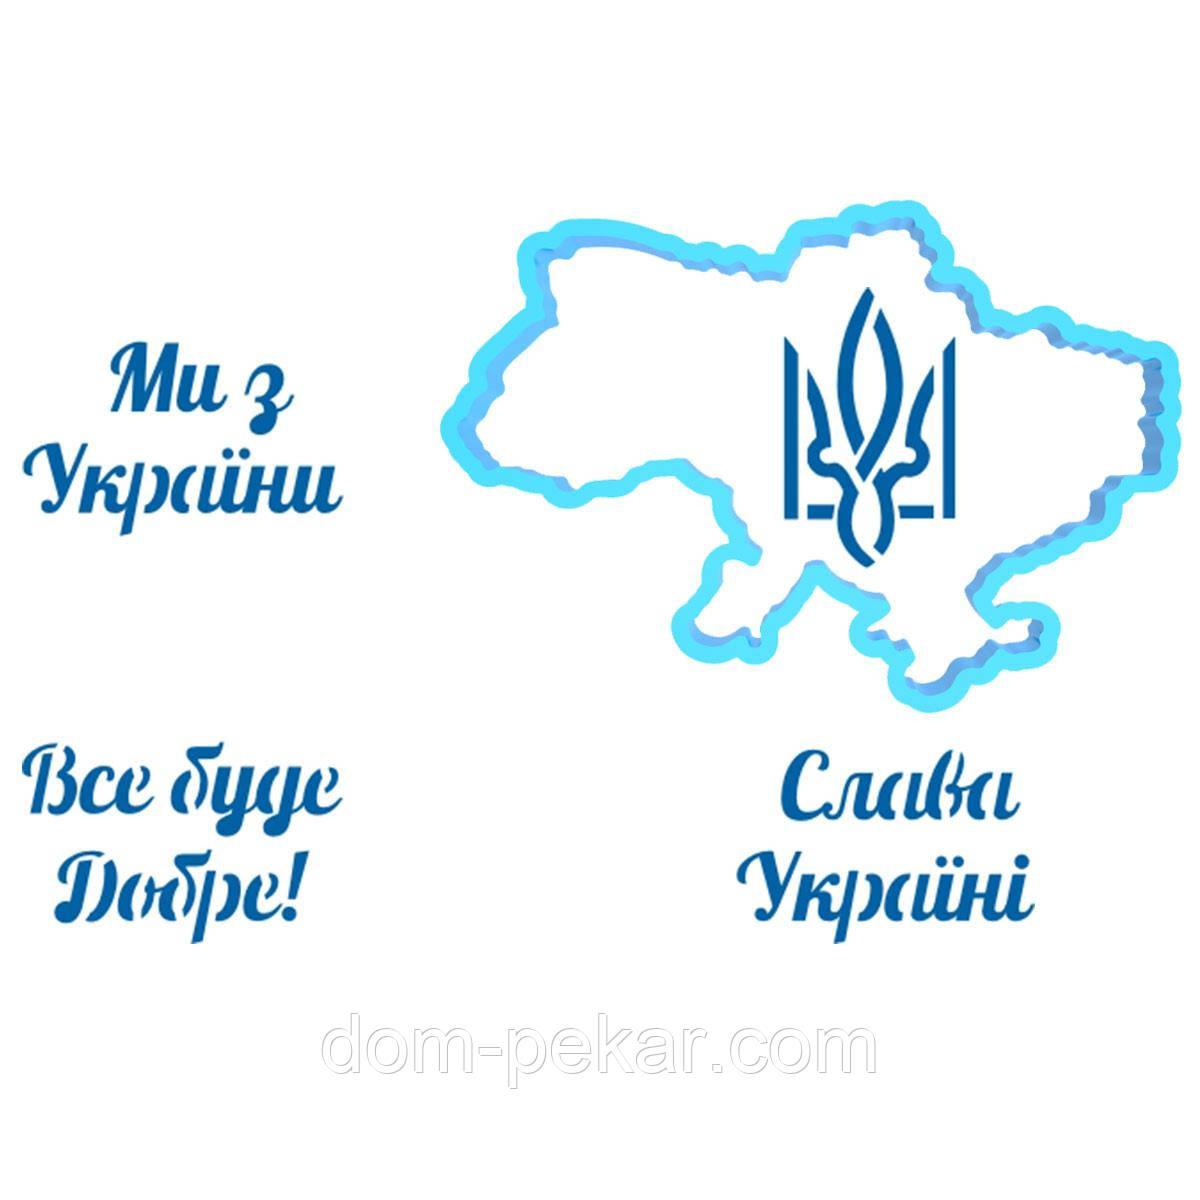 Мапа України вирубка з трафаретом 10*7 см (TR-2)